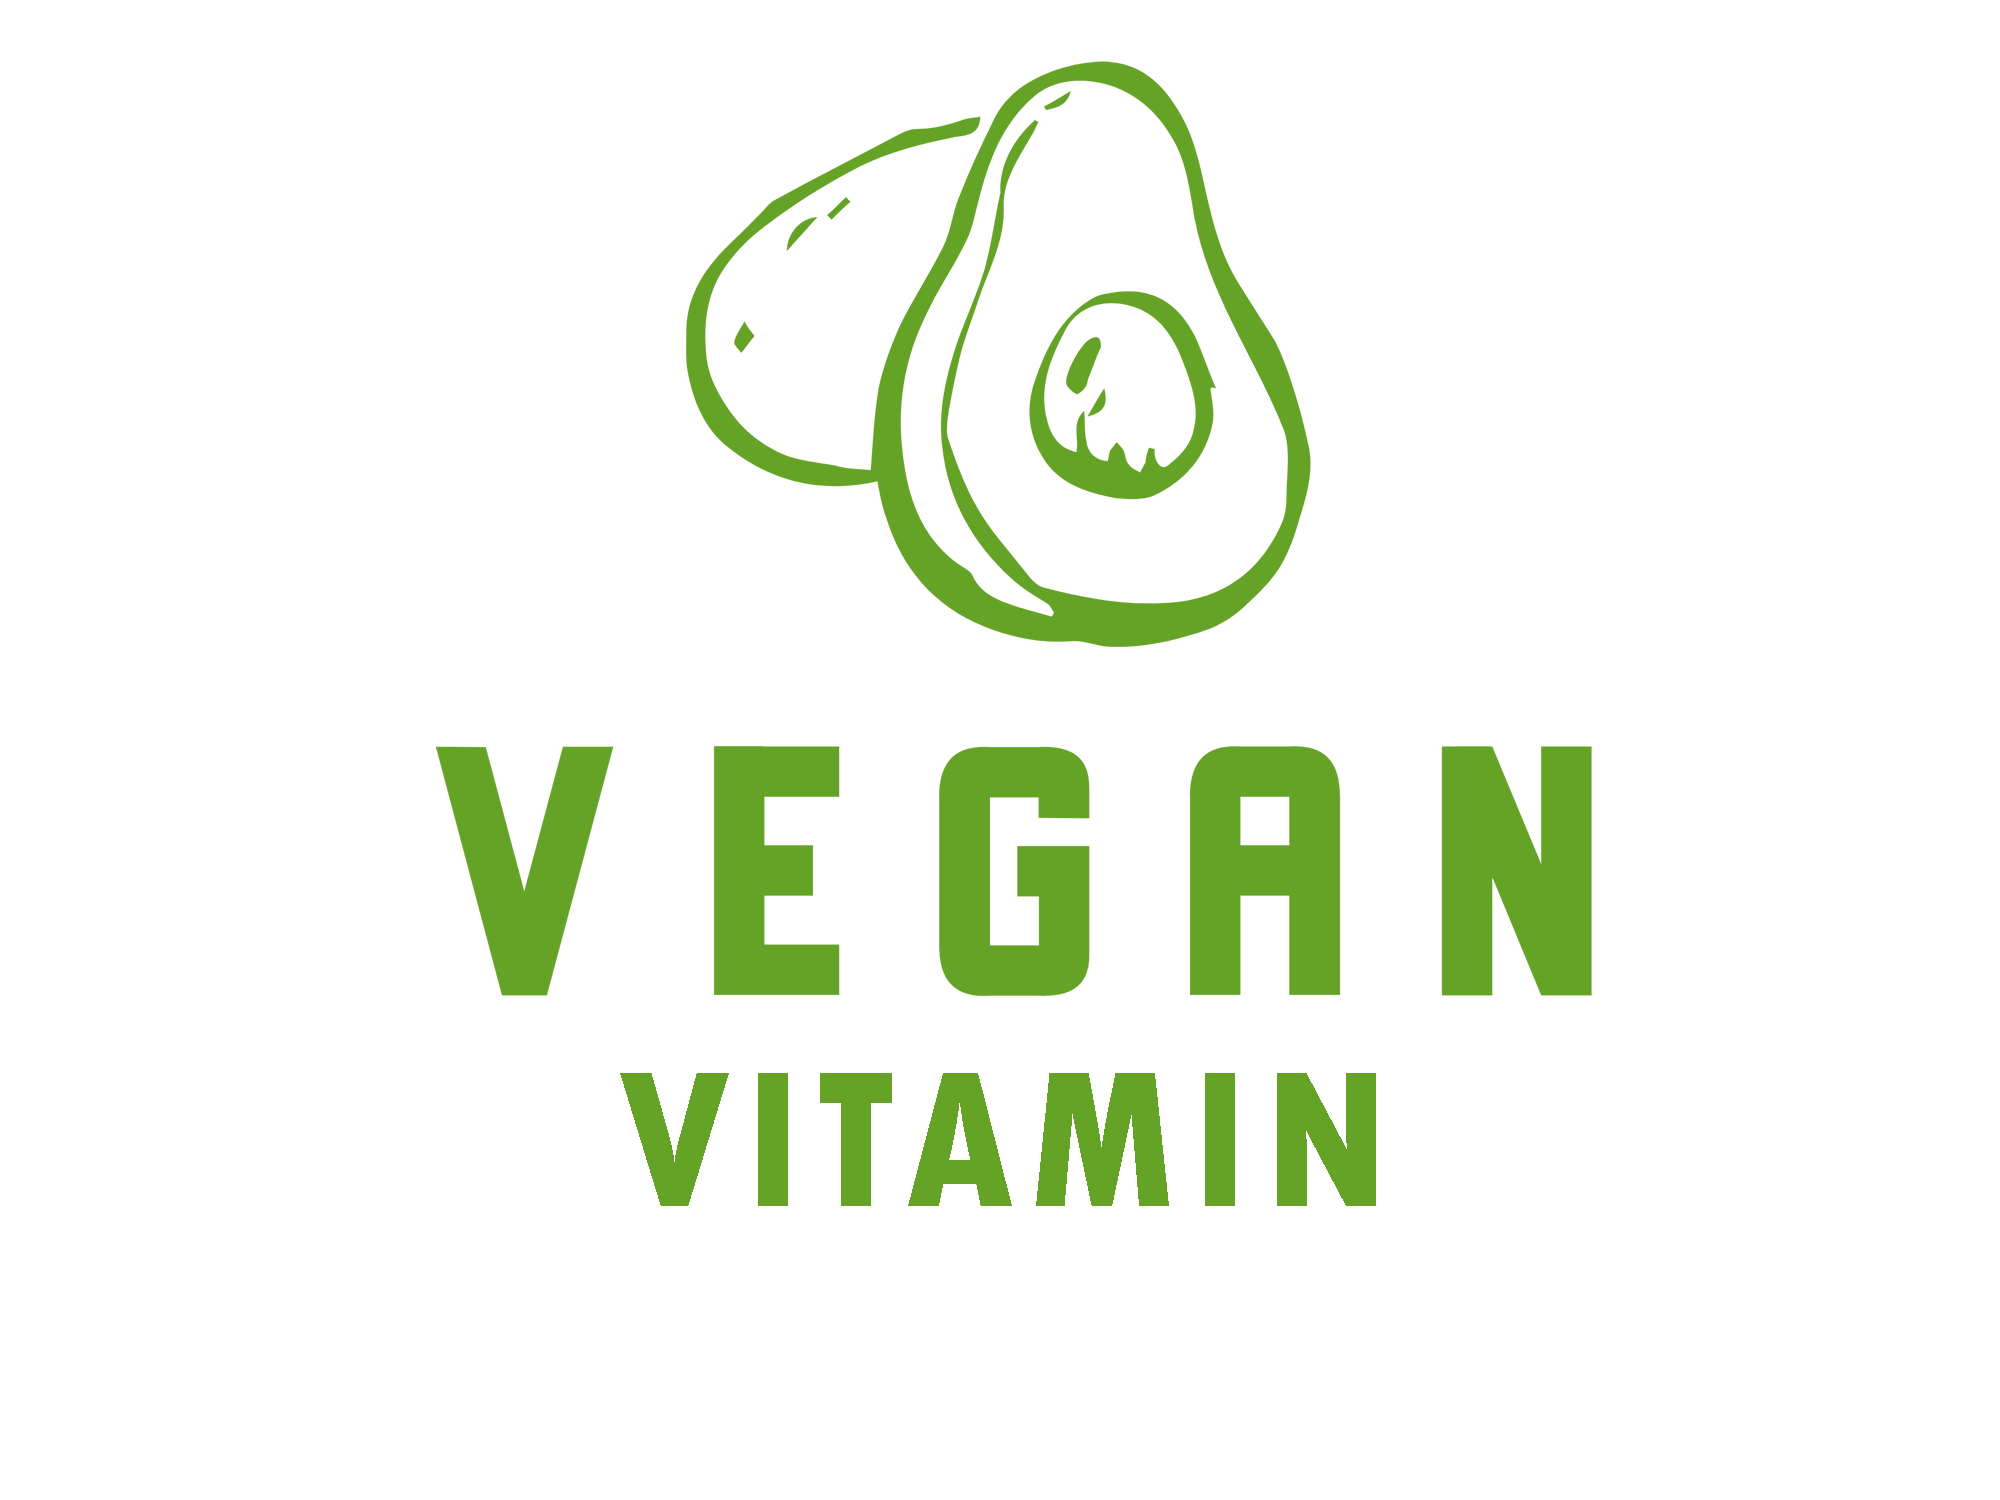 Vegan Vitamin